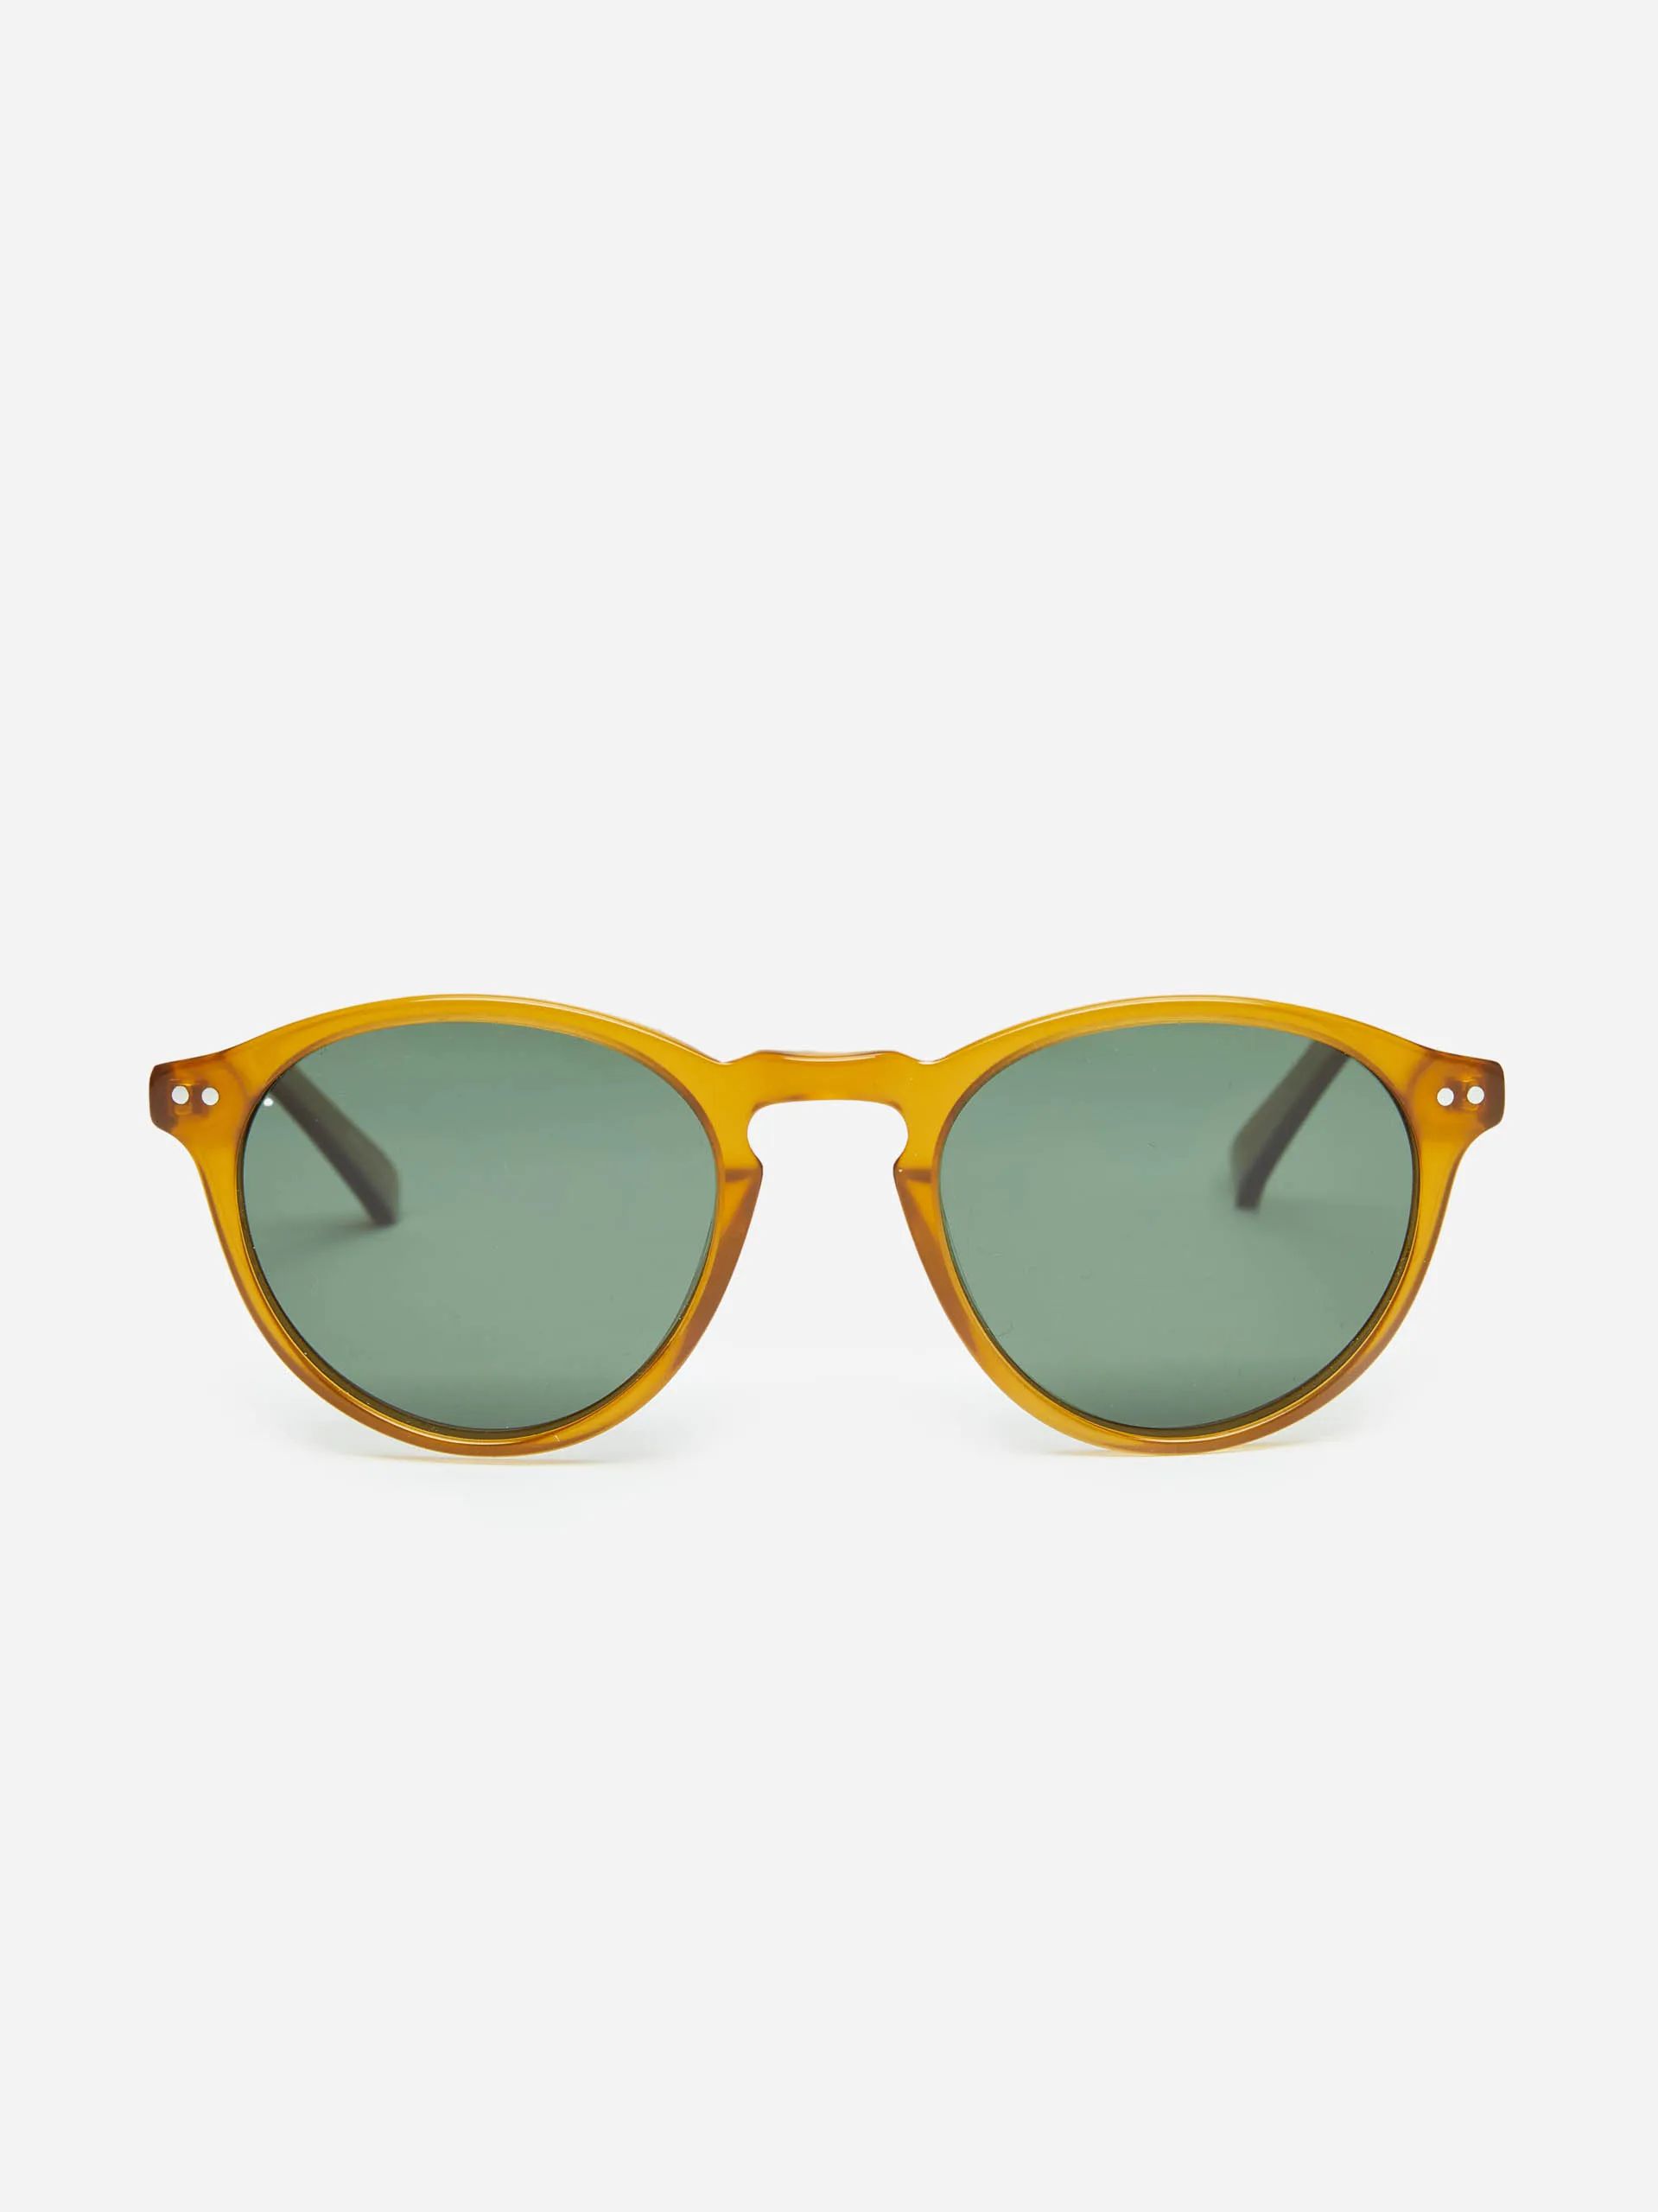 Bartleby Sunglasses | J.McLaughlin